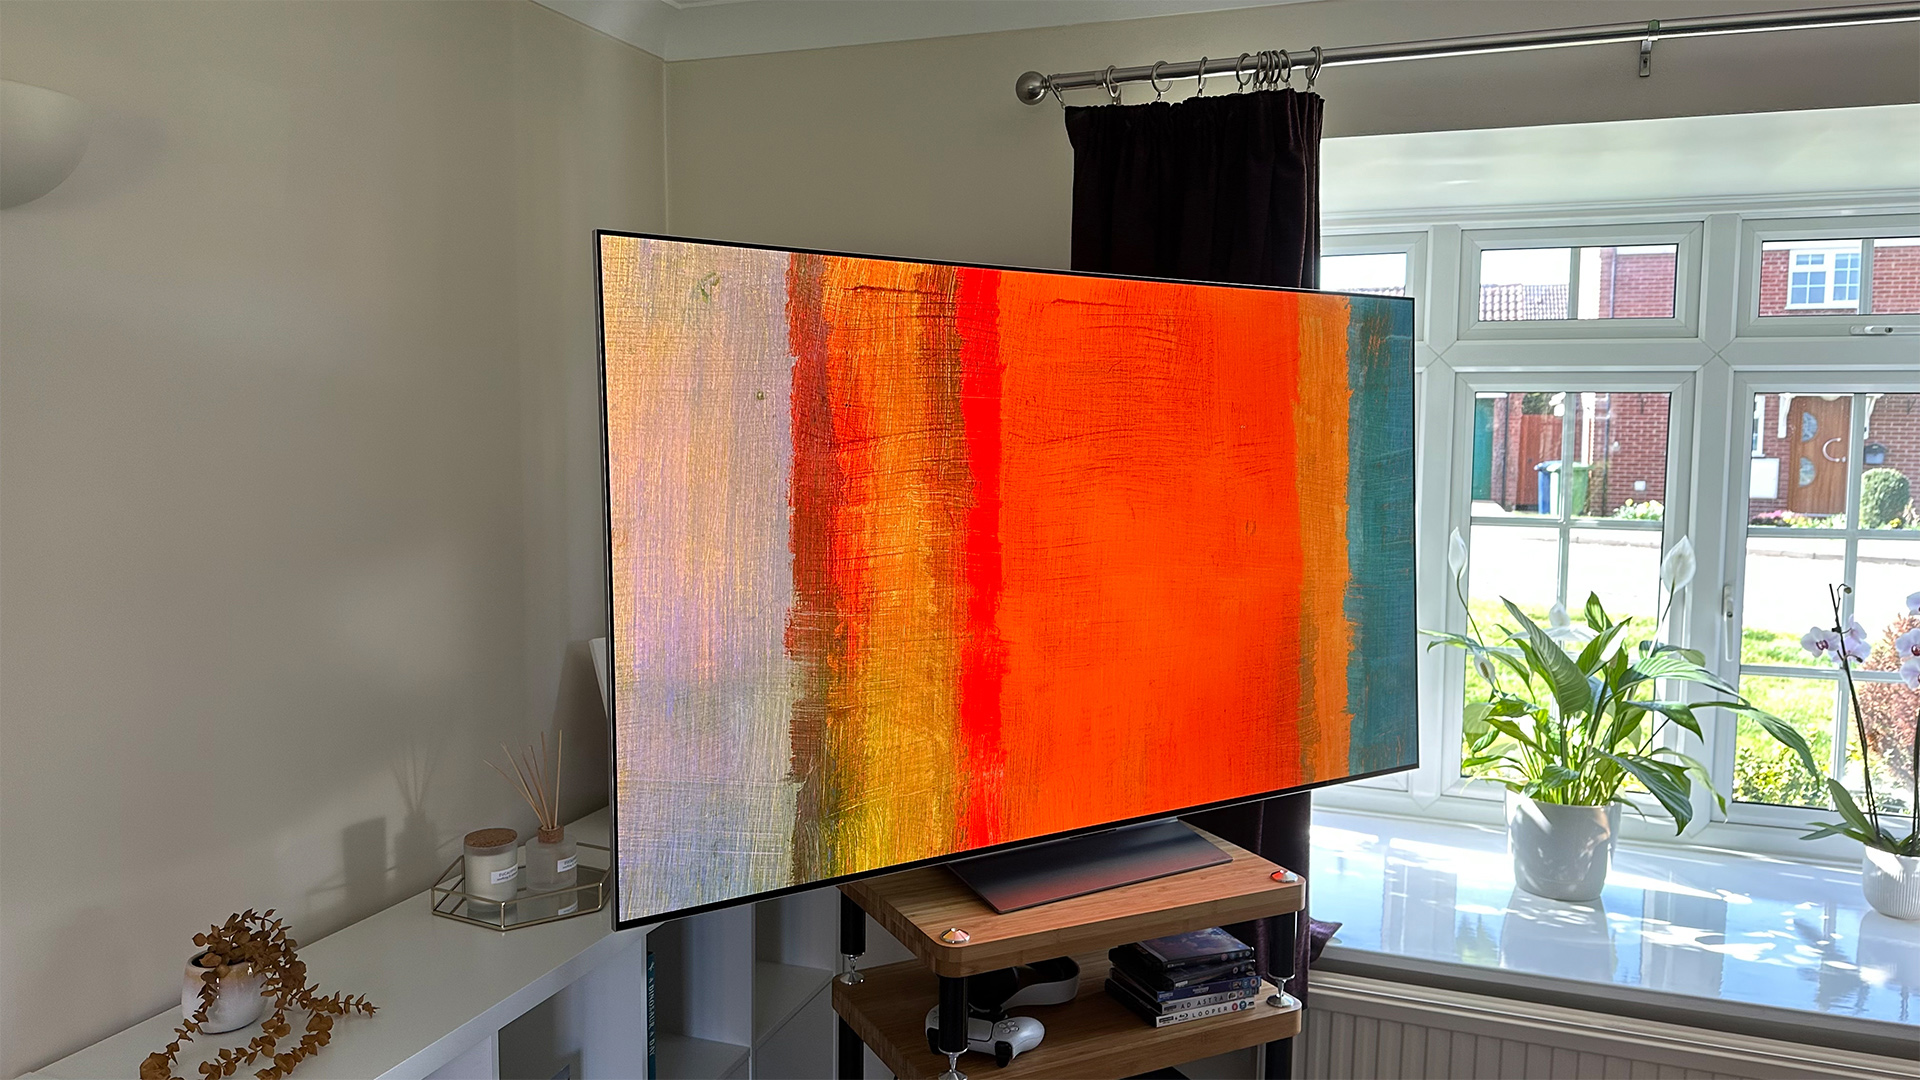 OLED TV: LG OLED65G3